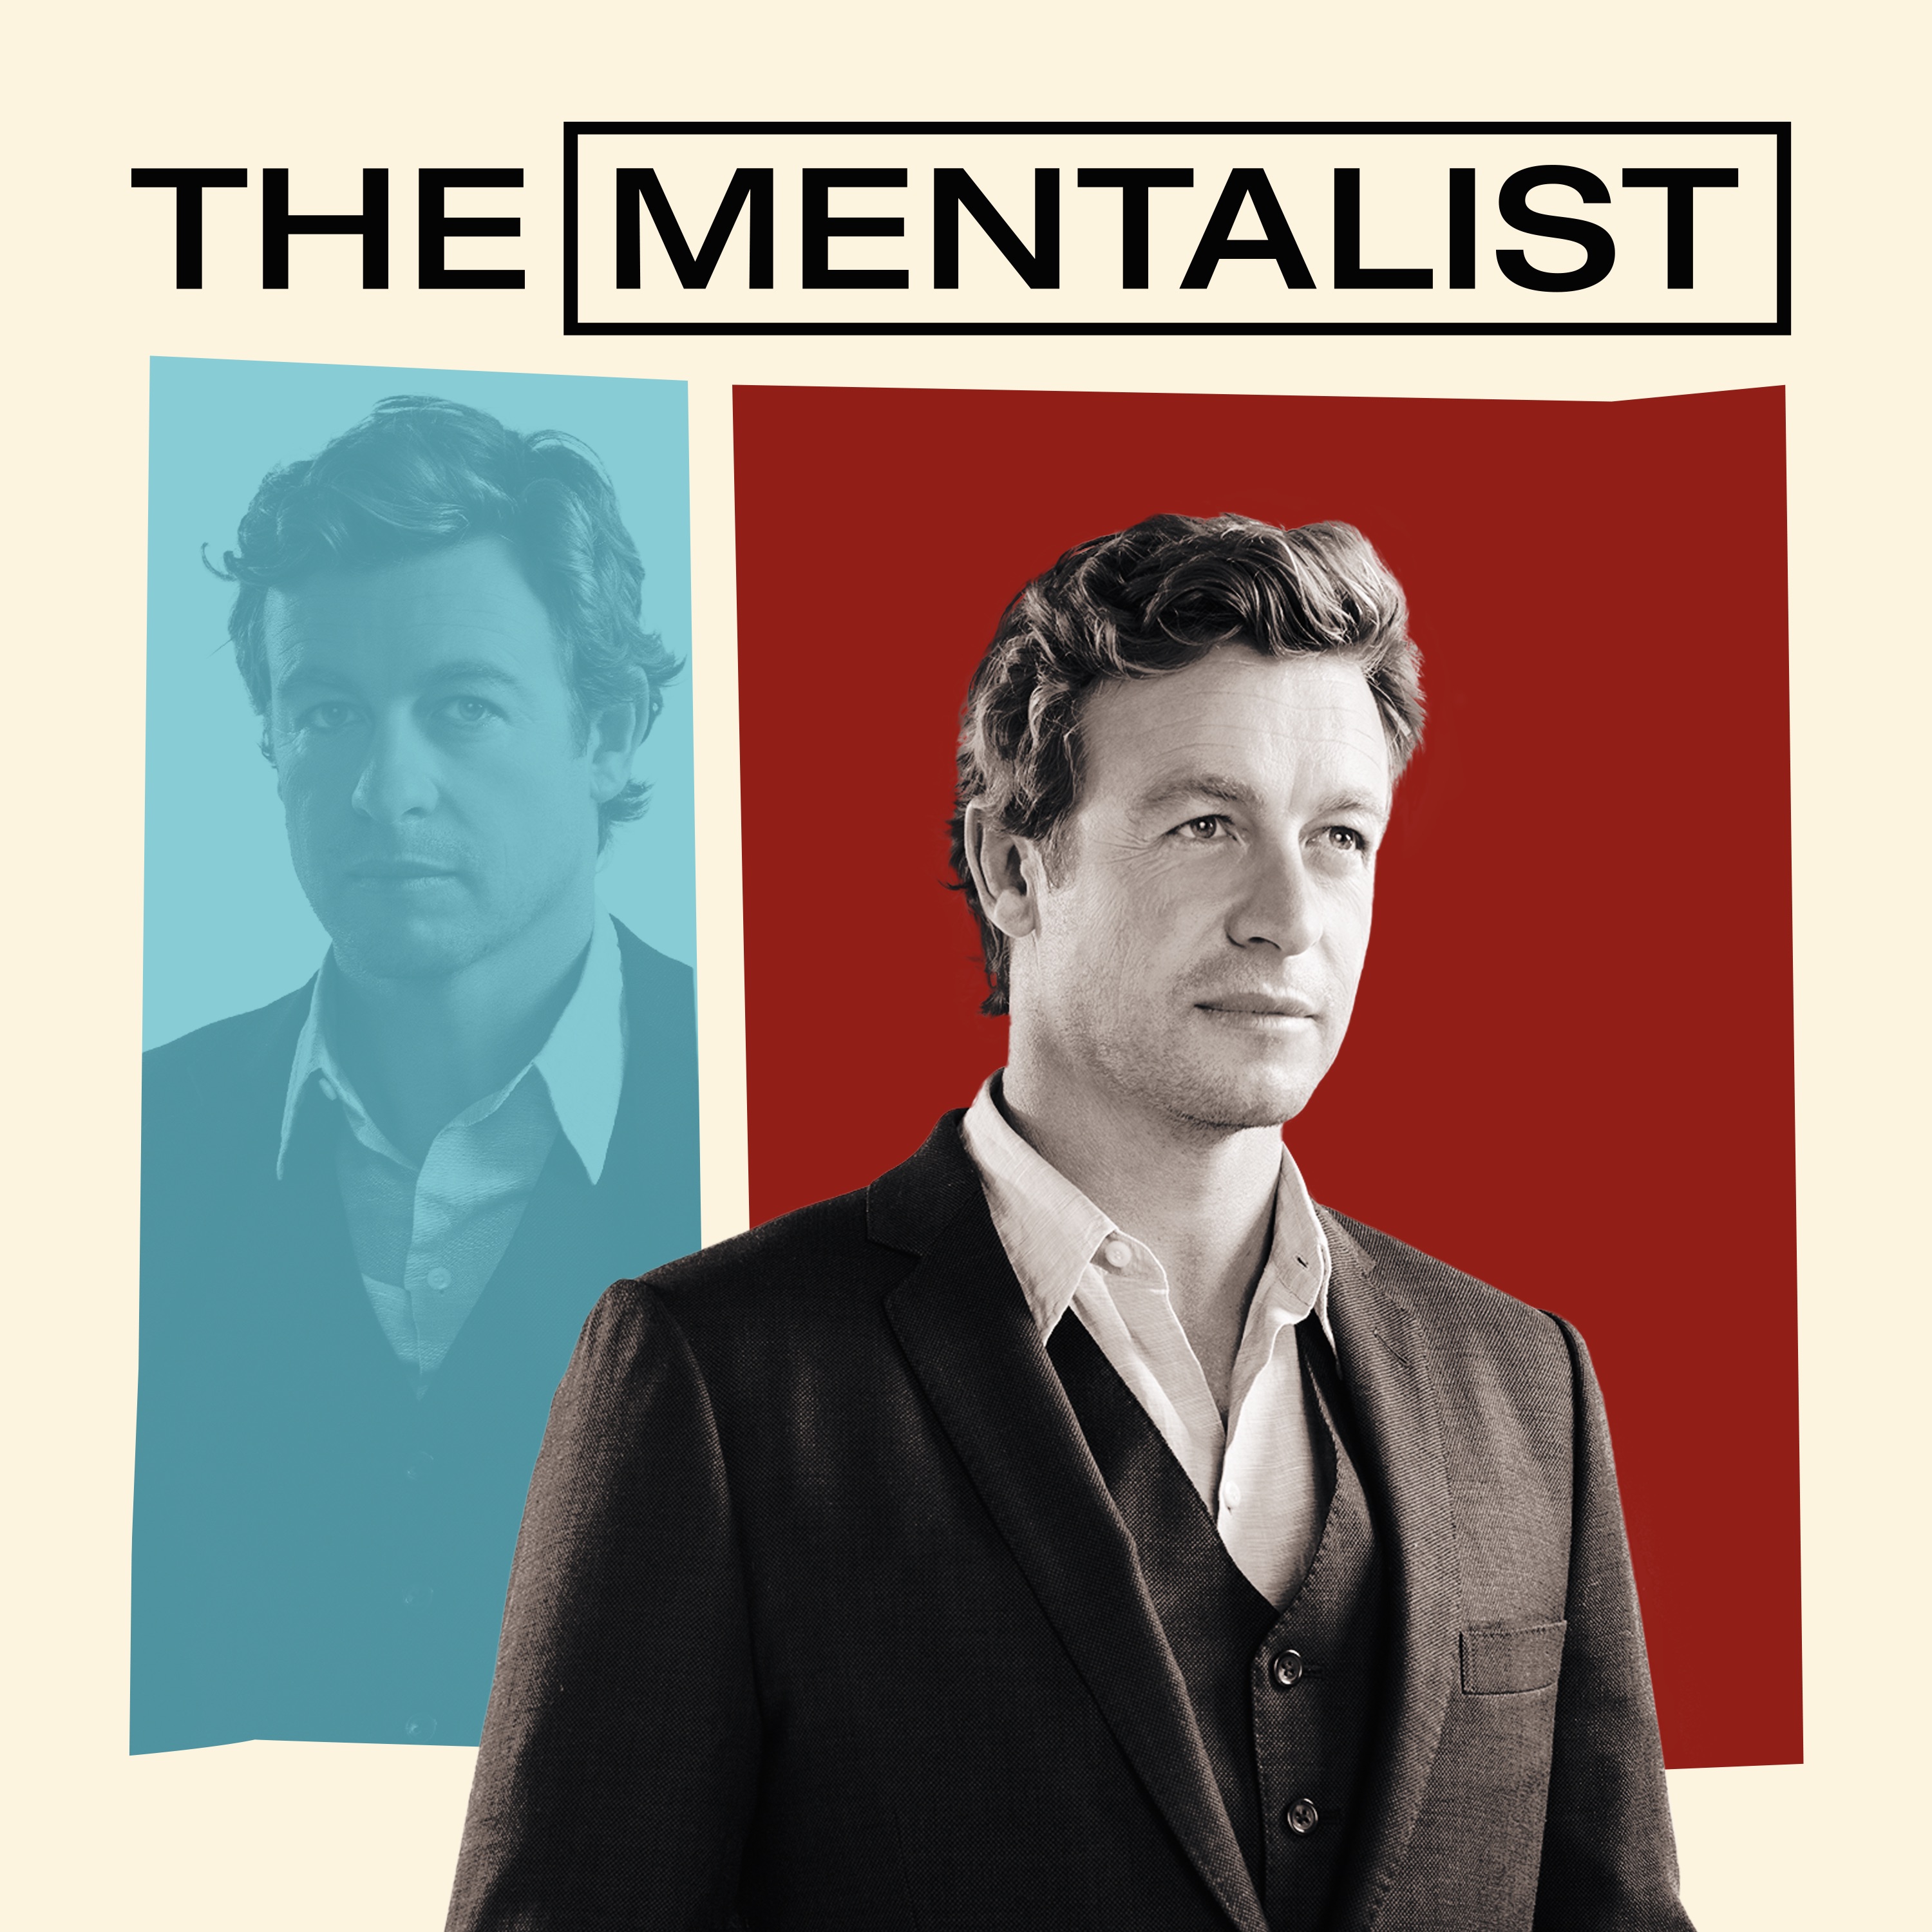 the mentalist free download season 1